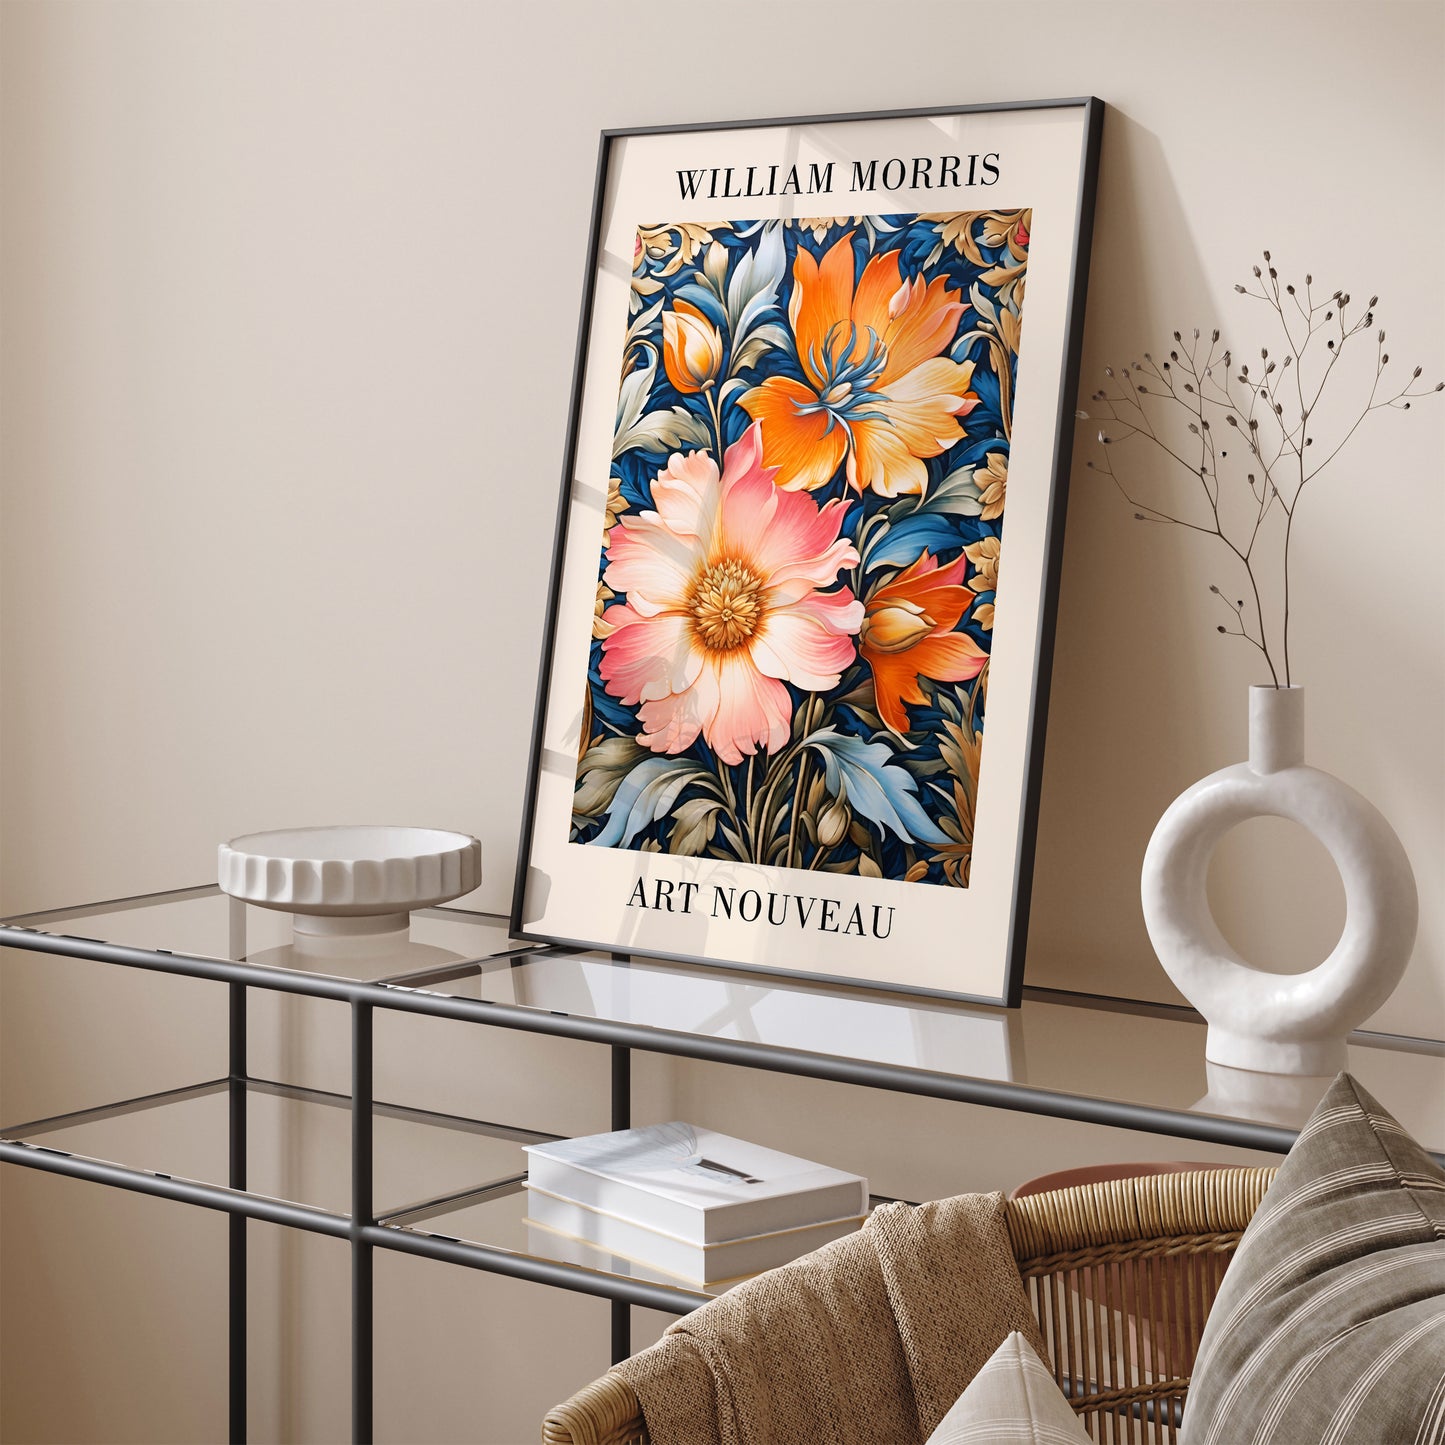 Victorian Renaissance: William Morris Poster